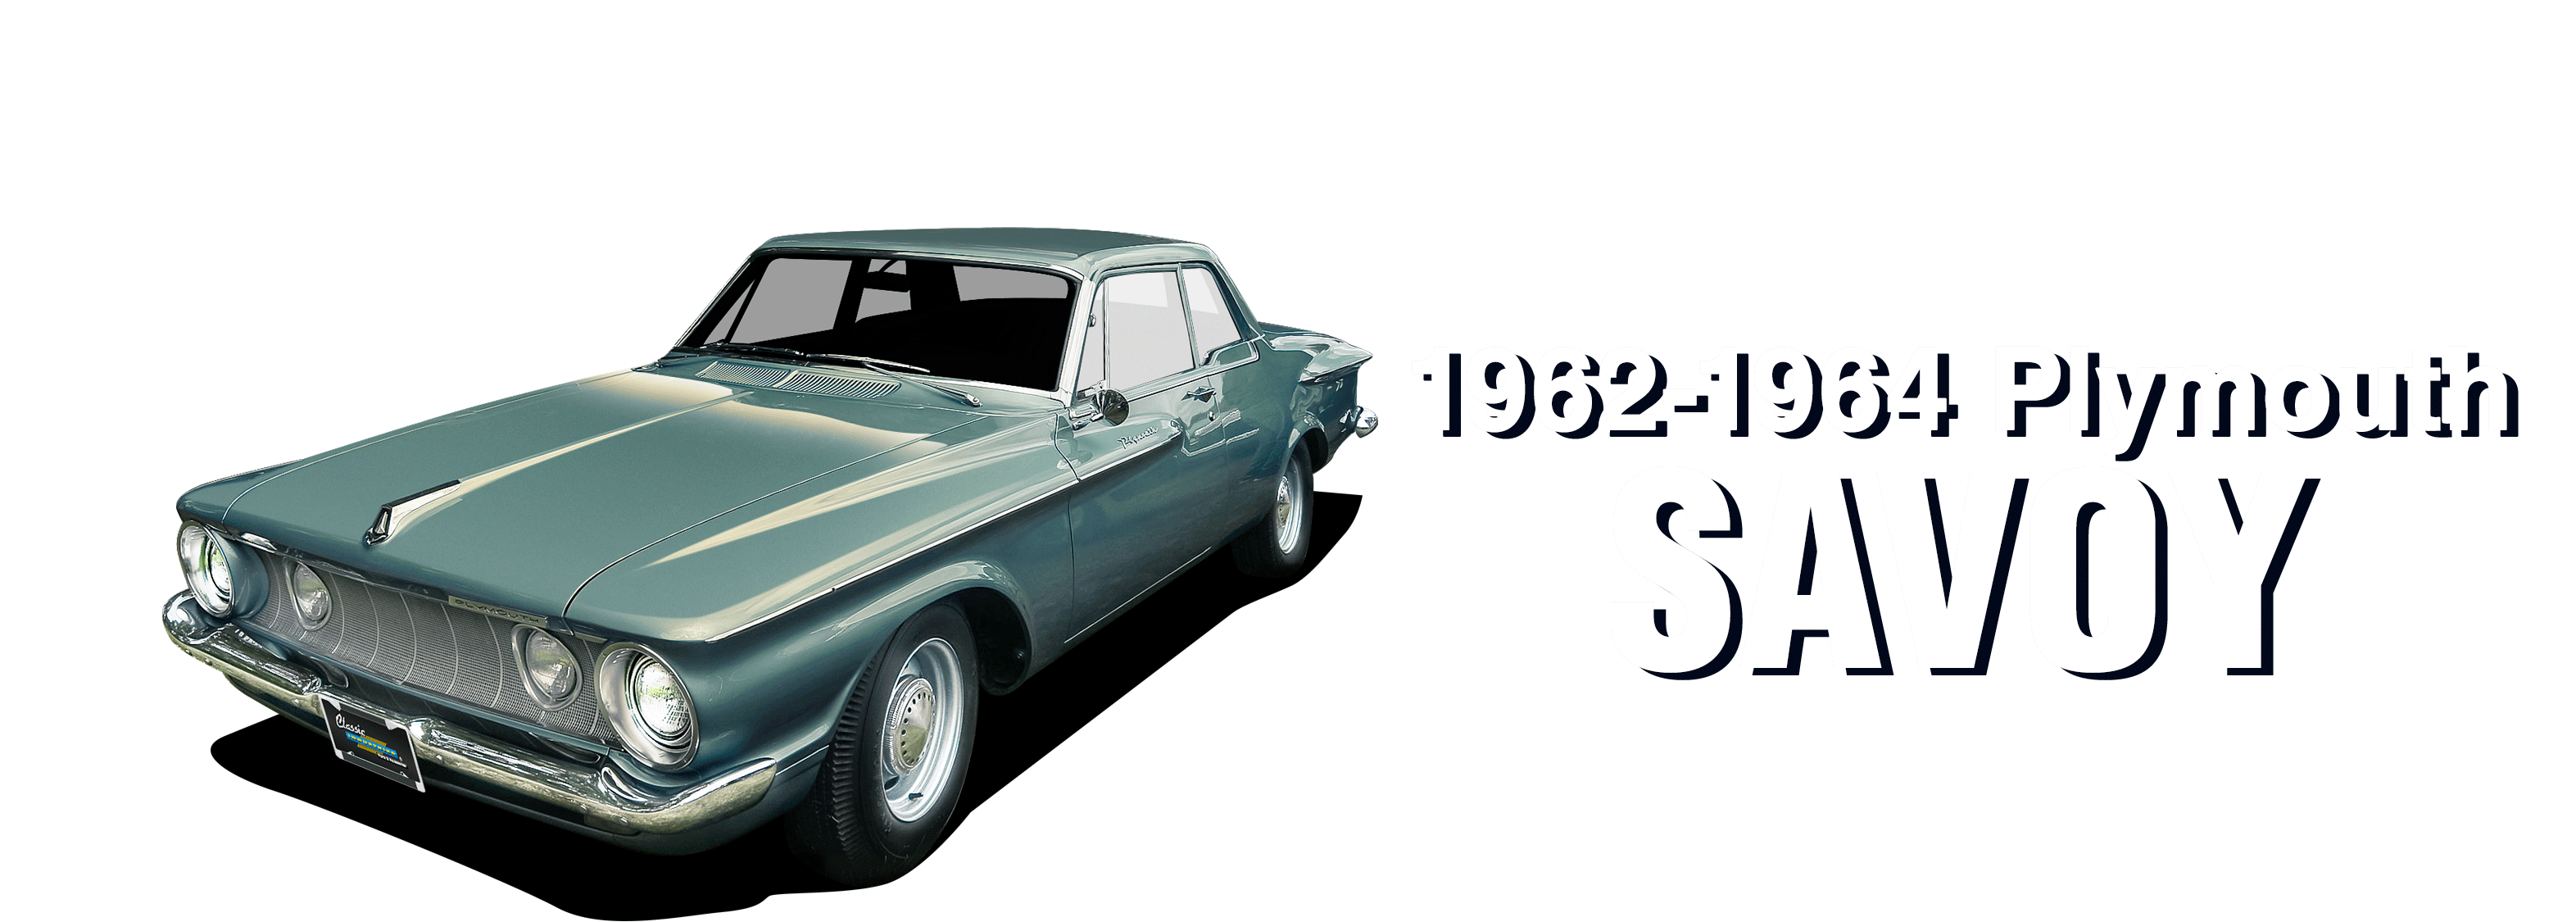 Plymouth-Savoy-vehicle-desktop